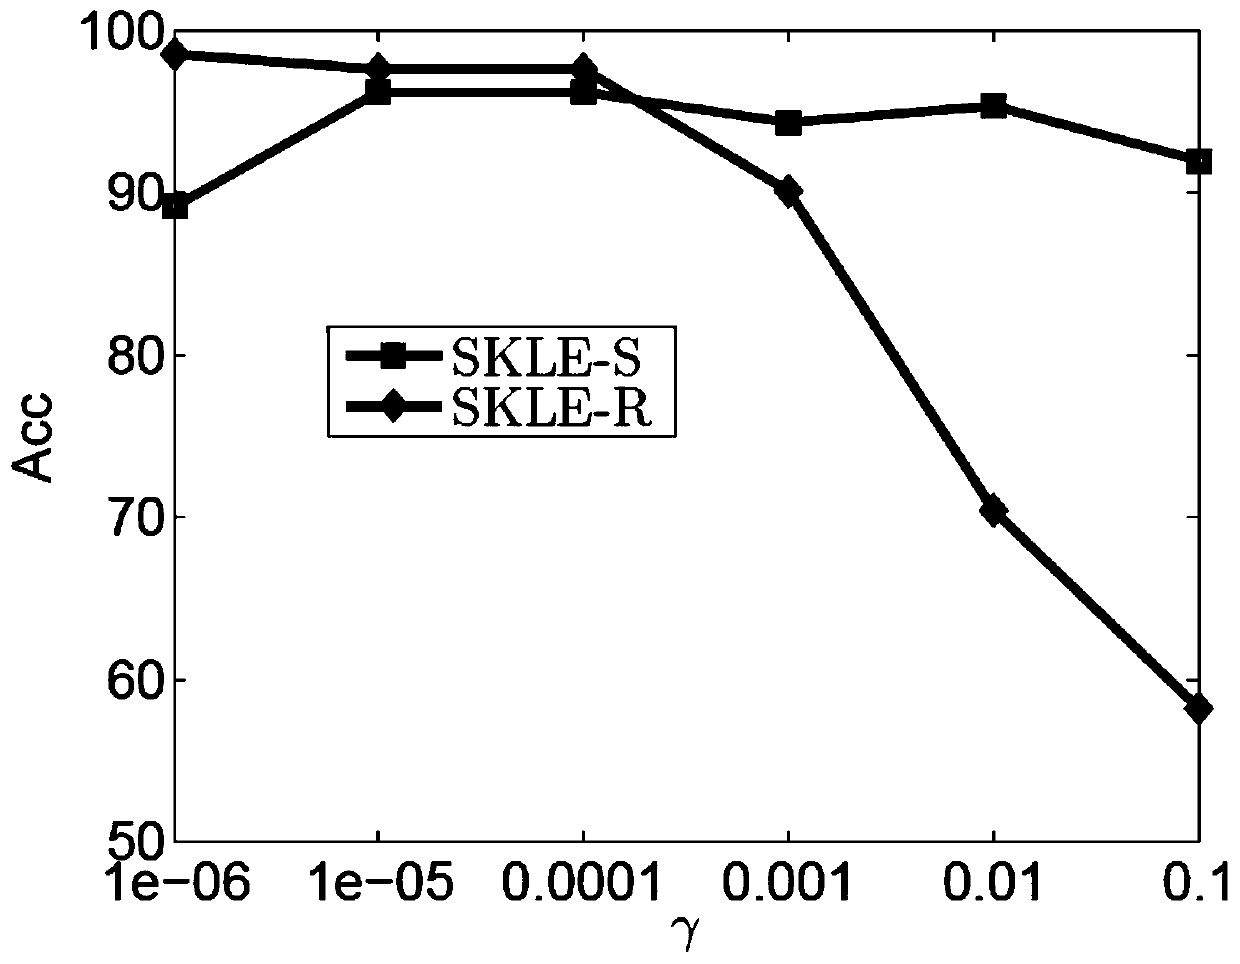 An image similarity measurement method based on kernel preserving